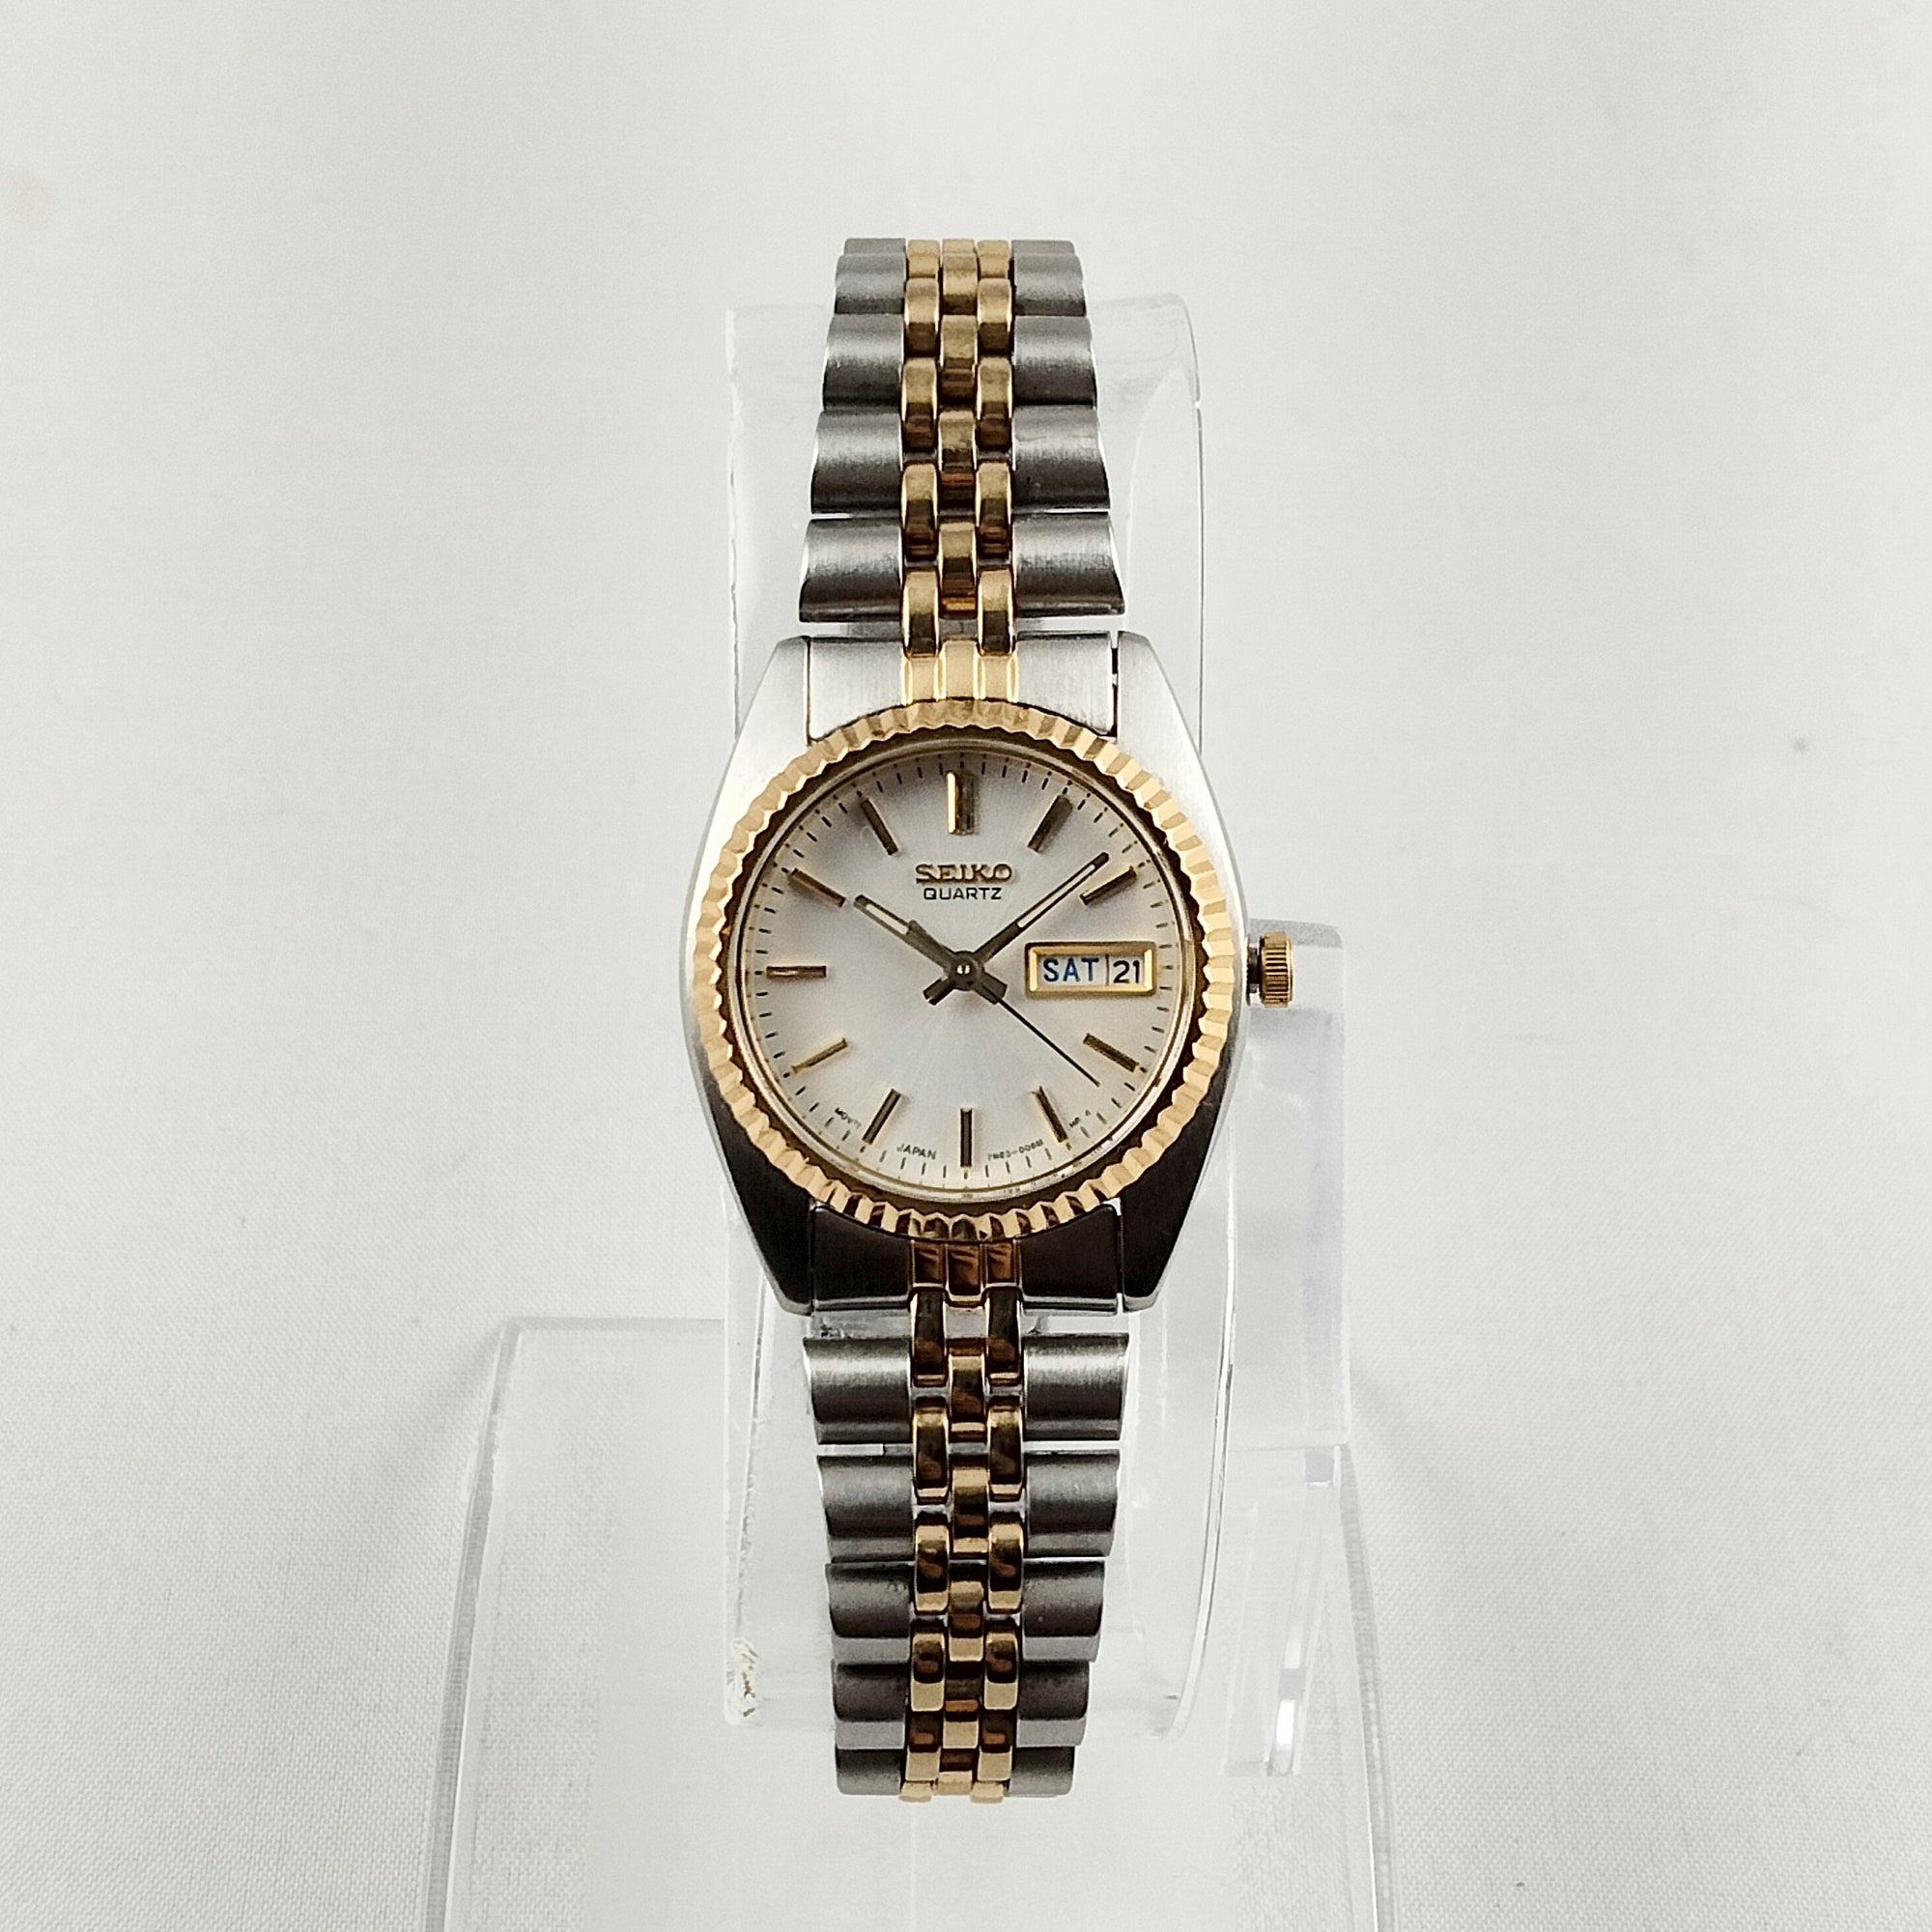 Seiko Unisex Silver and Gold Tone Watch, White Dial, Bracelet Strap